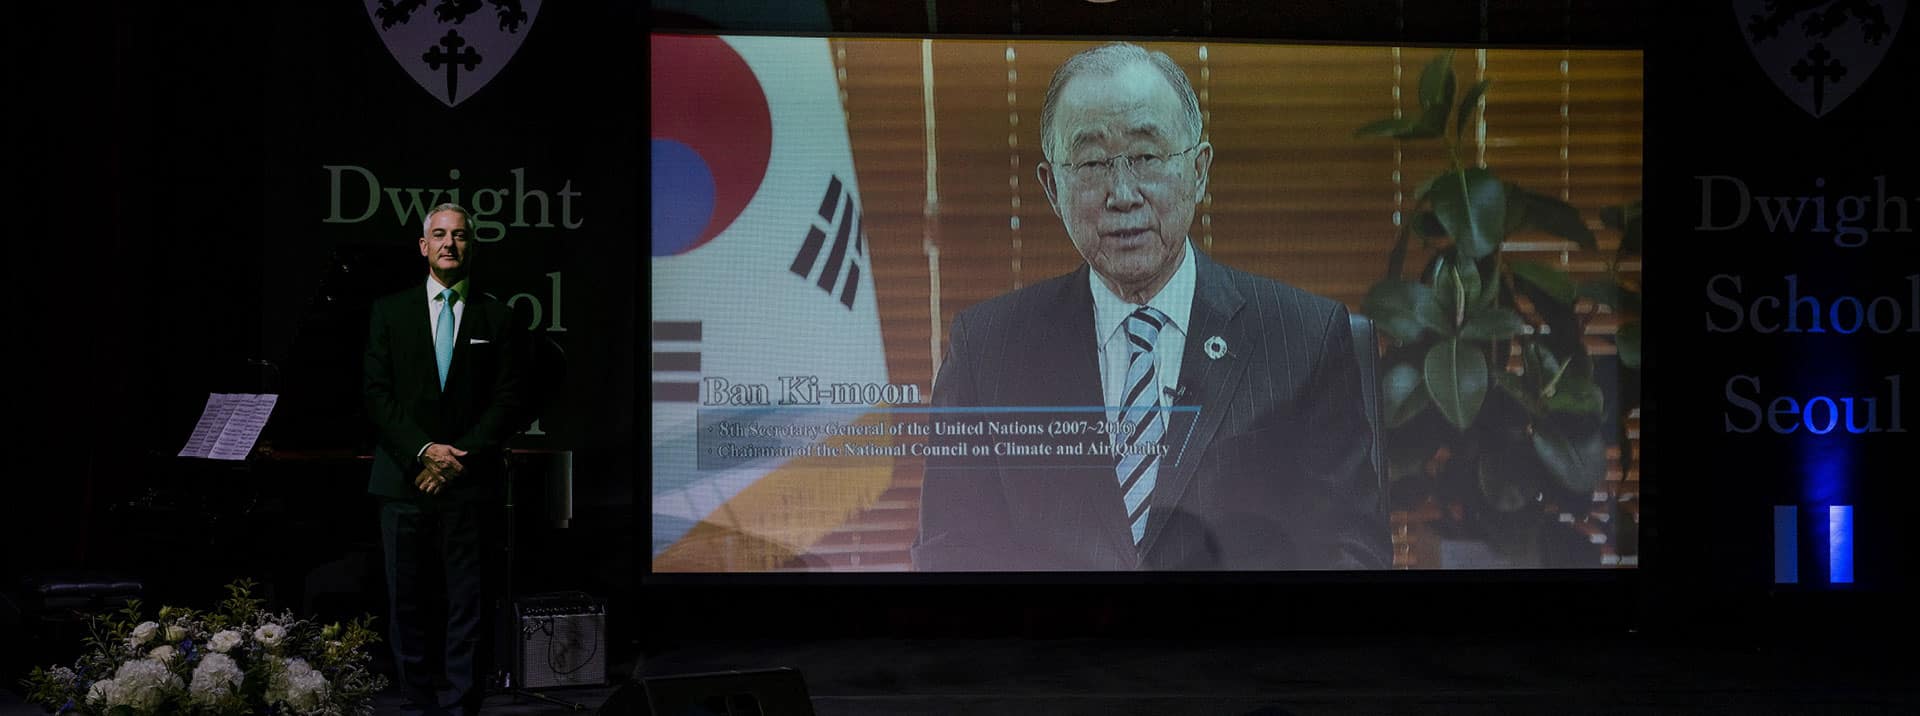 Ban Ki-moon shares inspiration for students graduating during the pandemic.